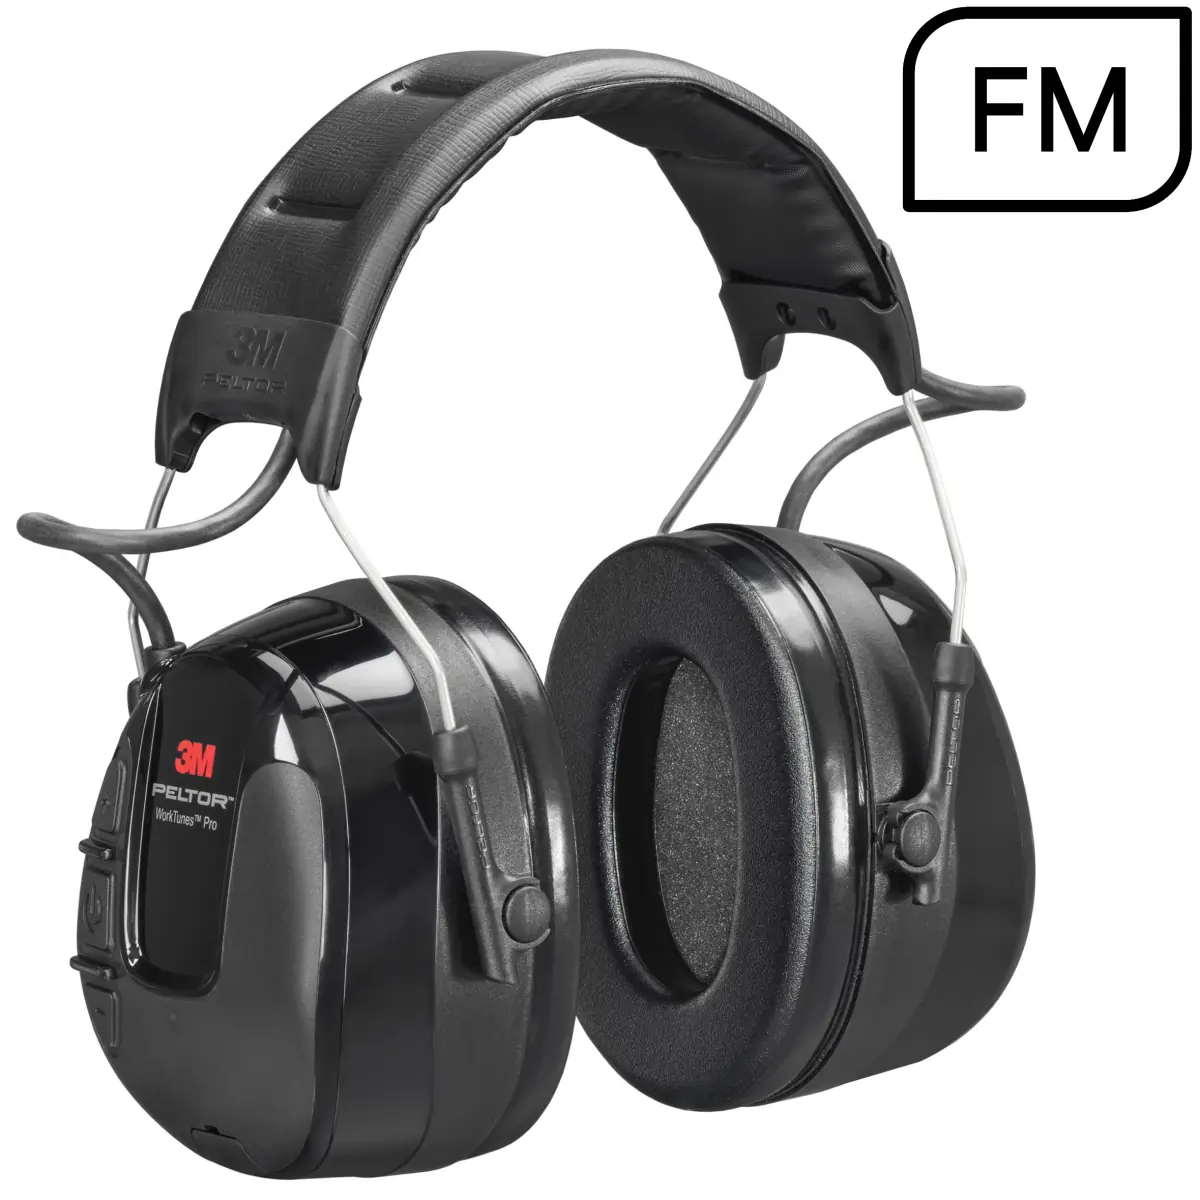 Set van 2 Peltor WorkTunes Pro FM-radio - HRXS220A - Headset FM-radio